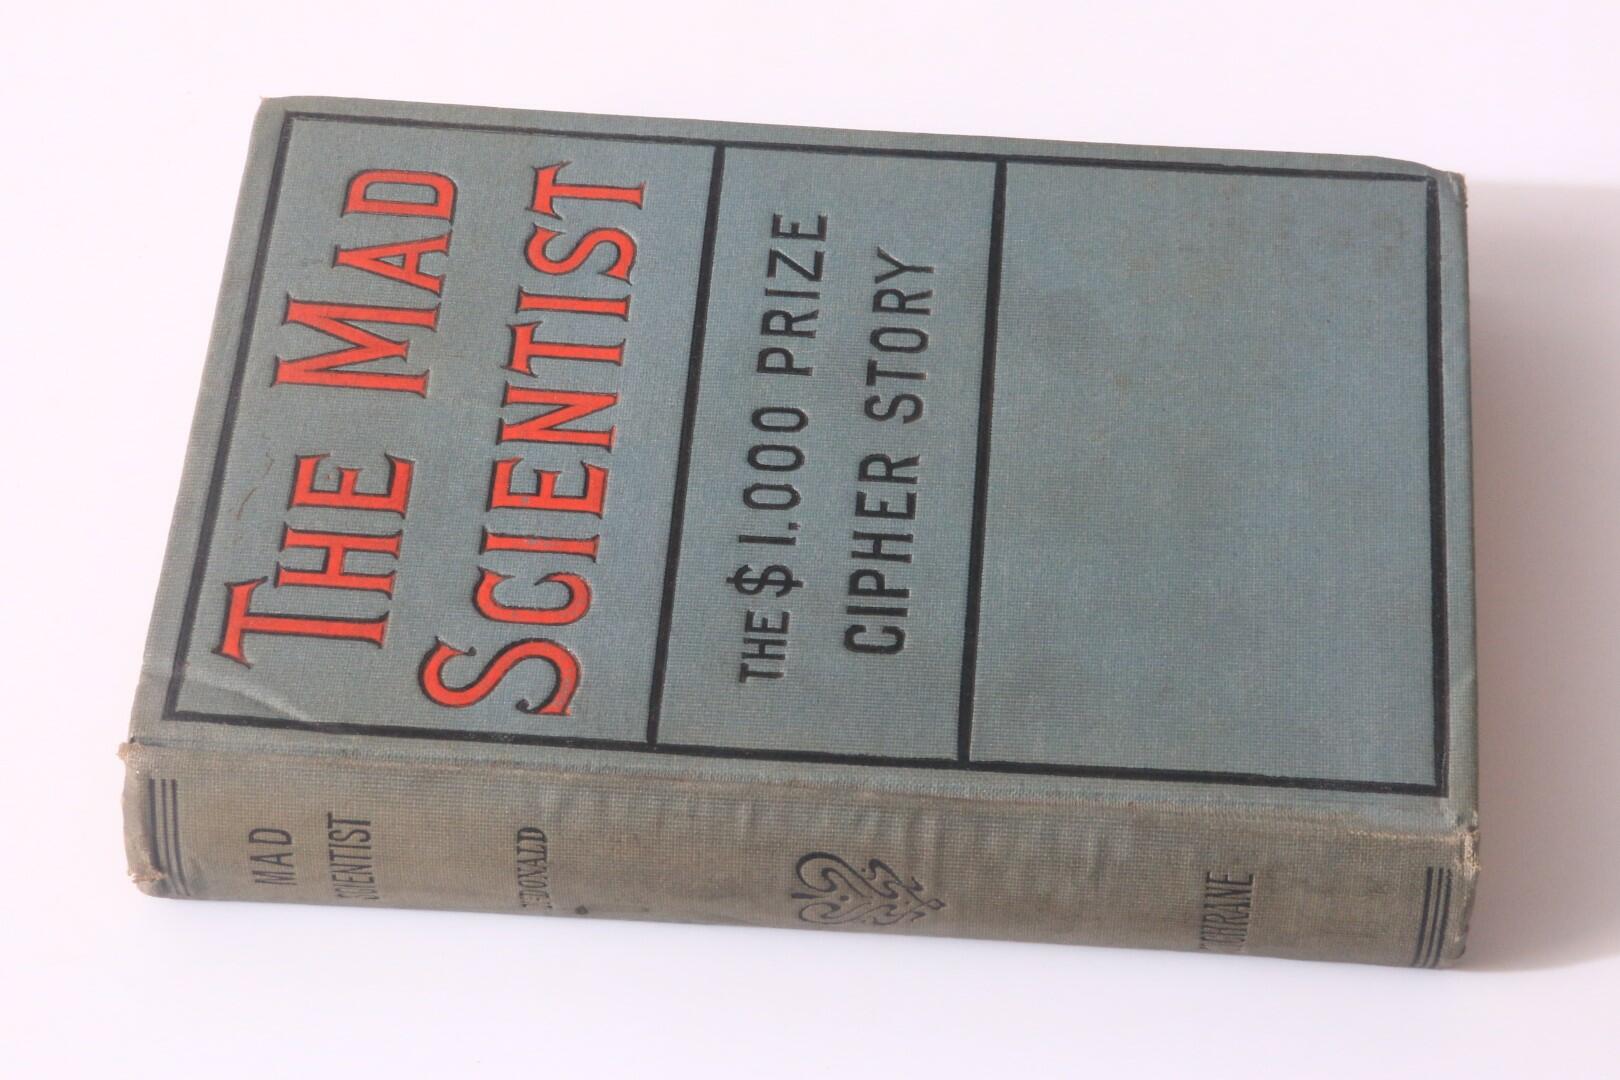 Raymond McDonald - The Mad Scientist - Cochrane Publishing Company, 1908, First Edition.